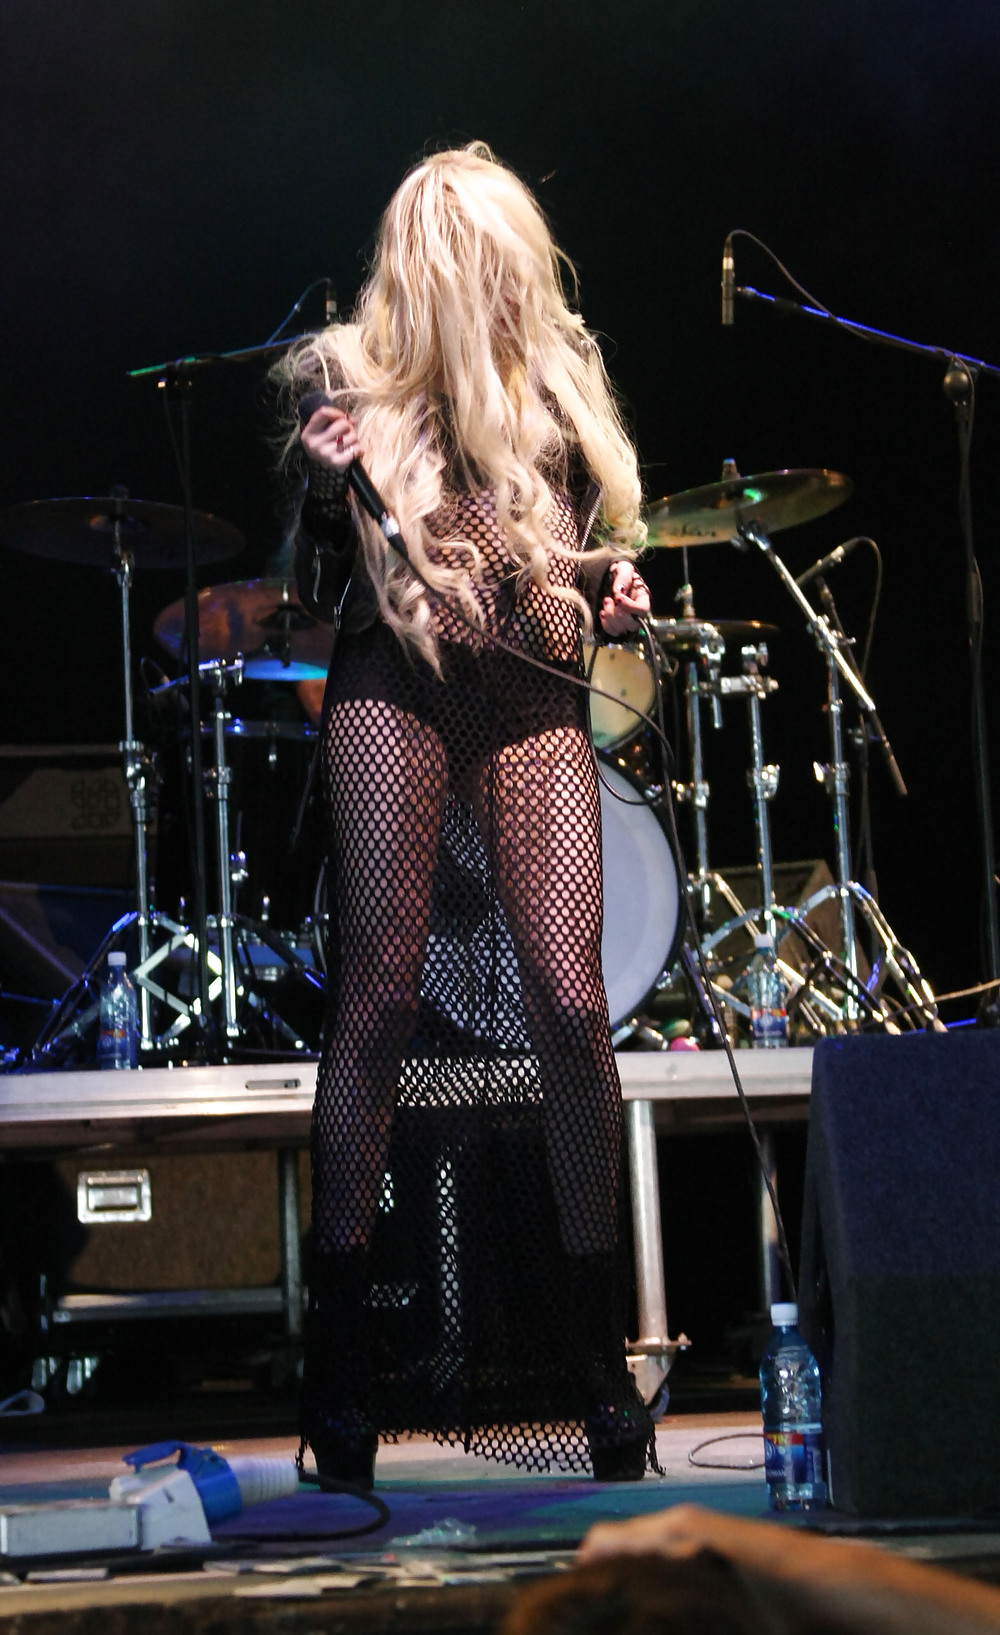 Taylor Momsen performing at Oxegen Festival in Ireland